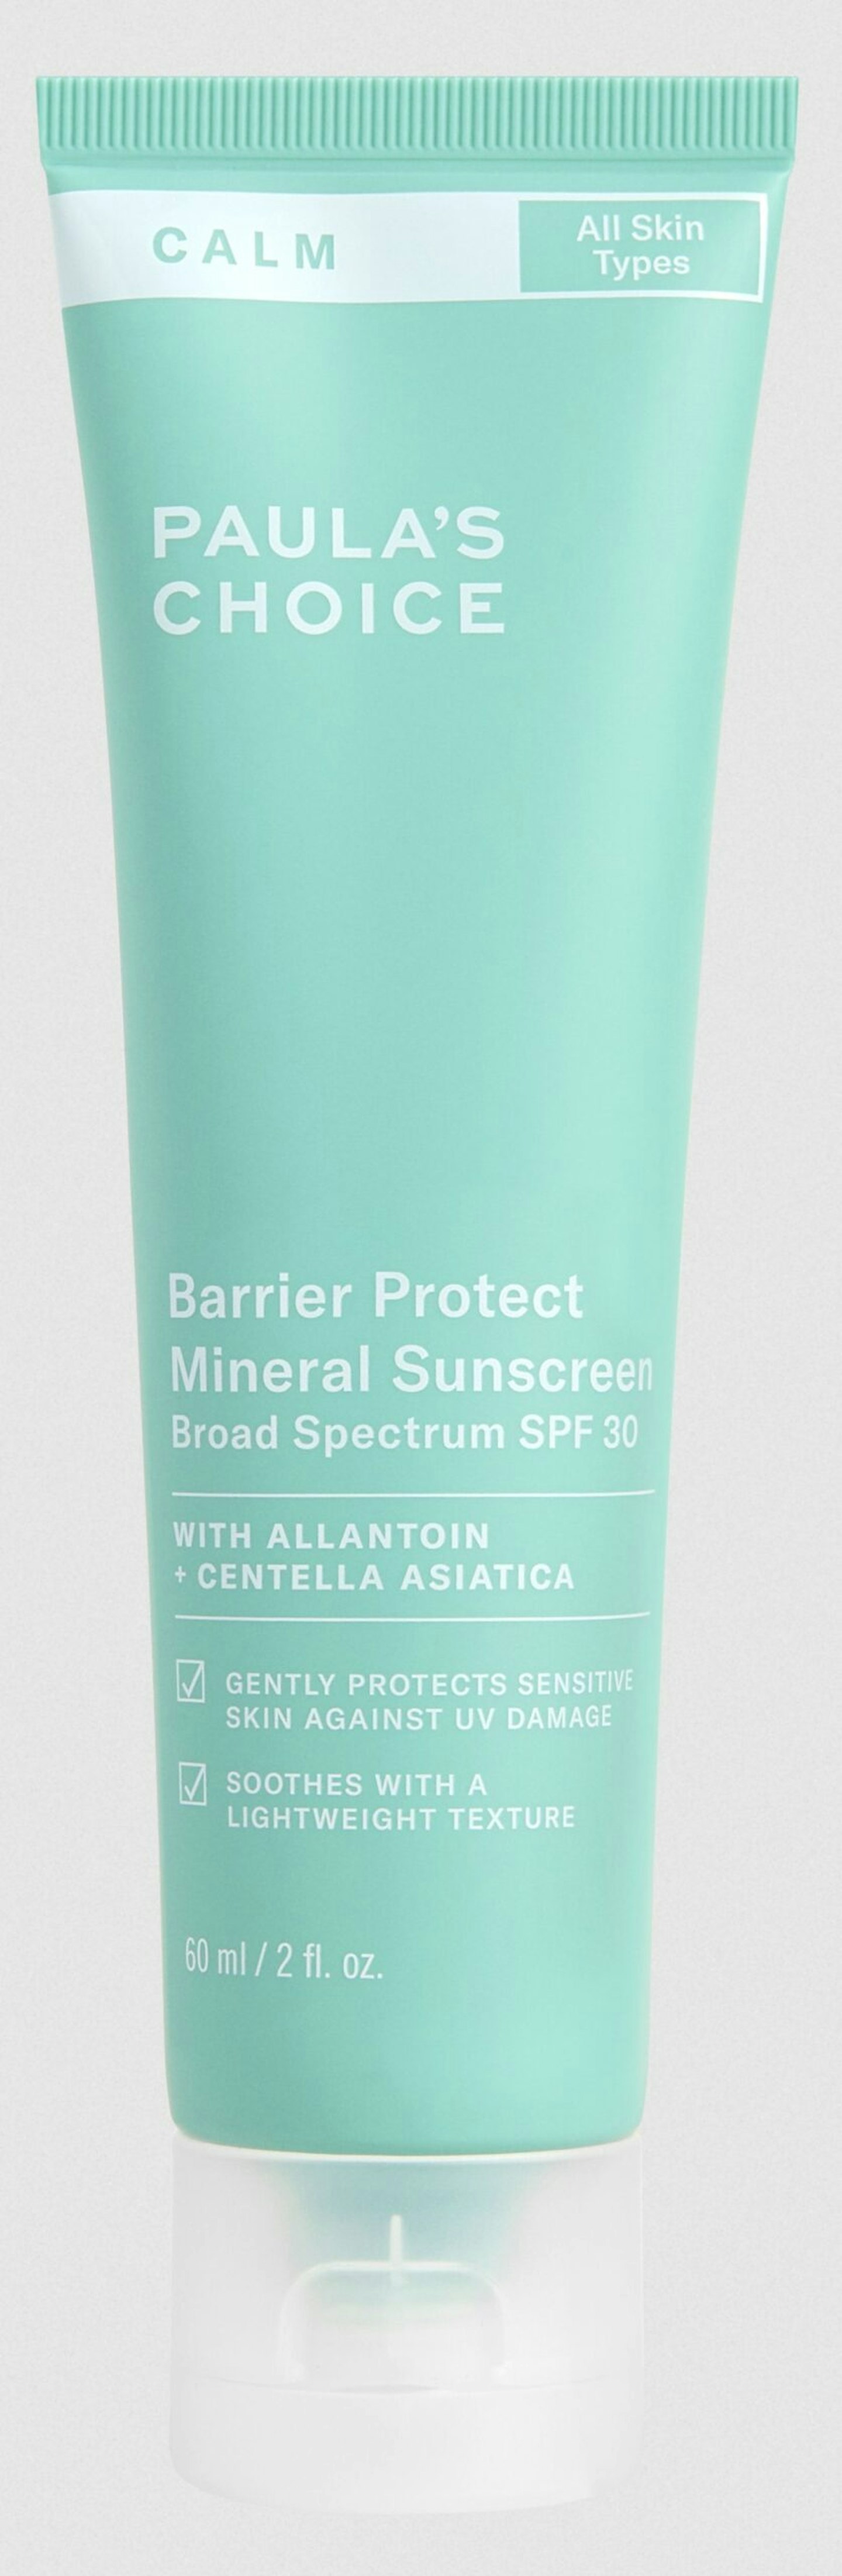 Paula’s Choice Barrier Protect Mineral Sunscreen SPF 30